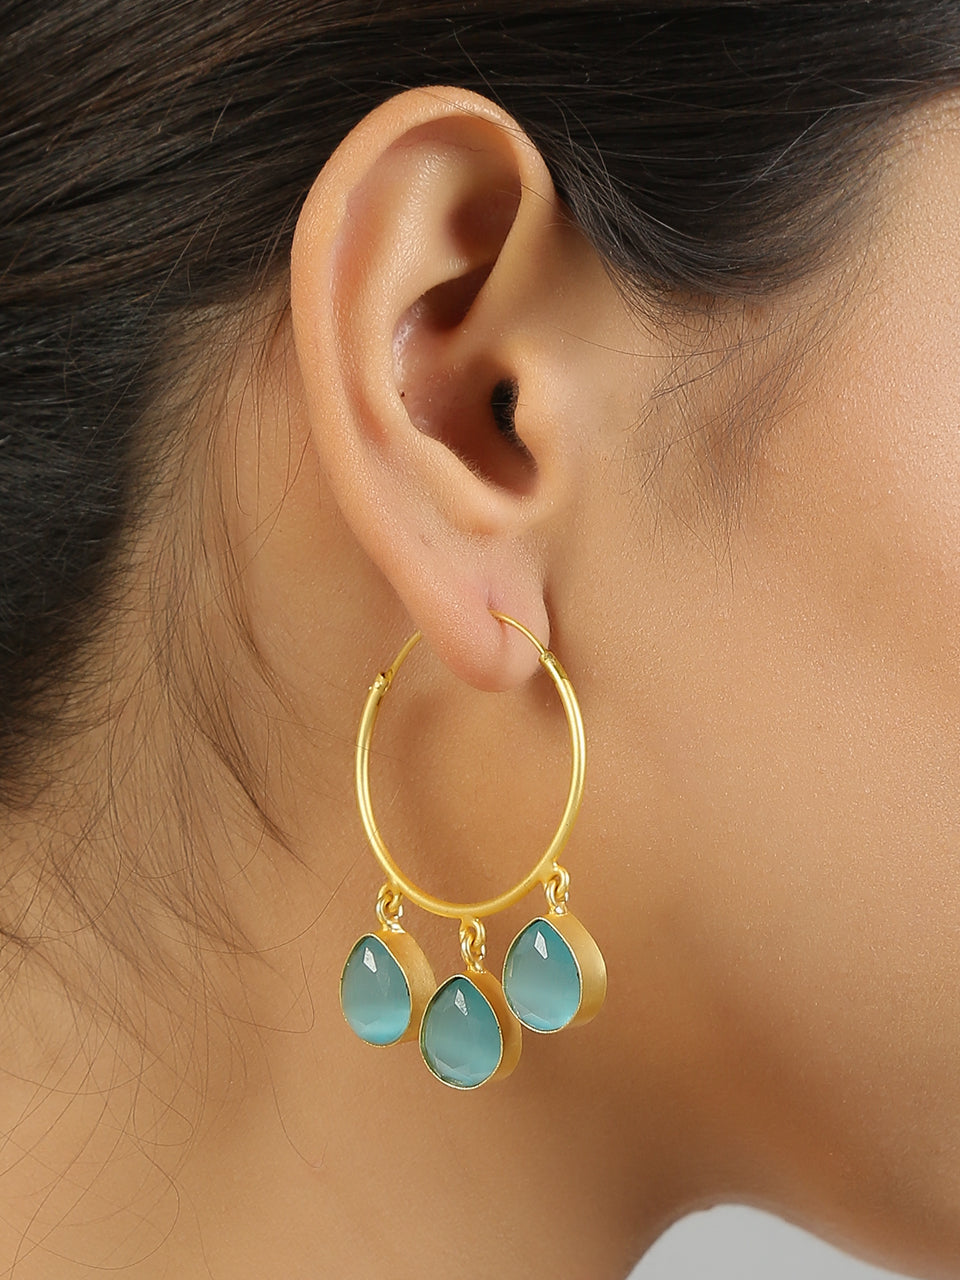 Women's Contemporary Gold Hoop Earrings - Femizen